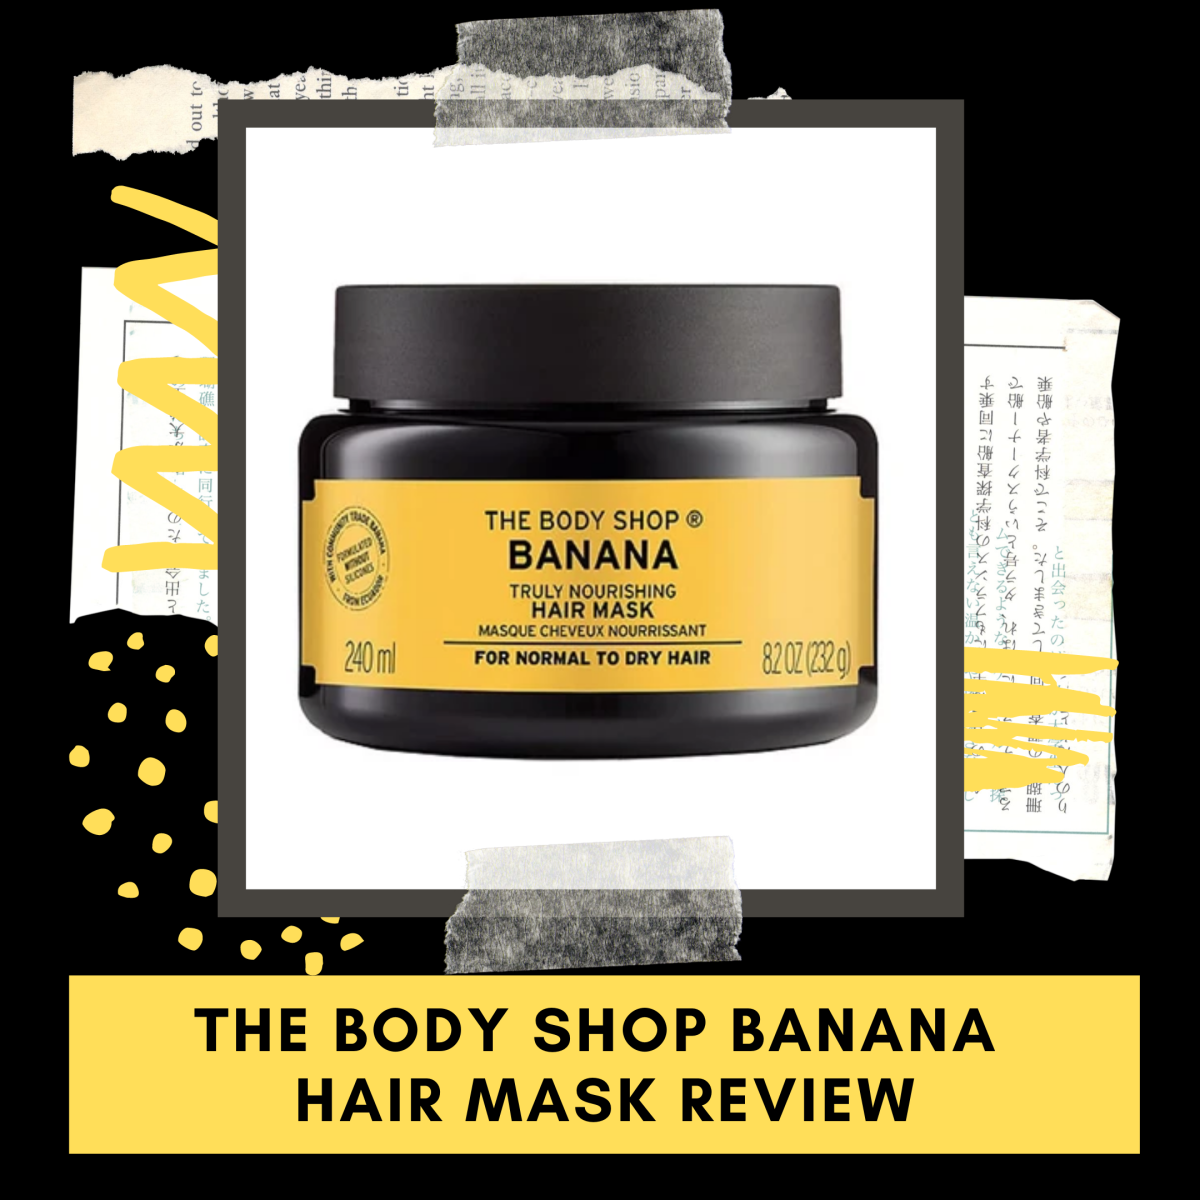 The Body Shop Banana Truly Nourishing Hair Mask Review